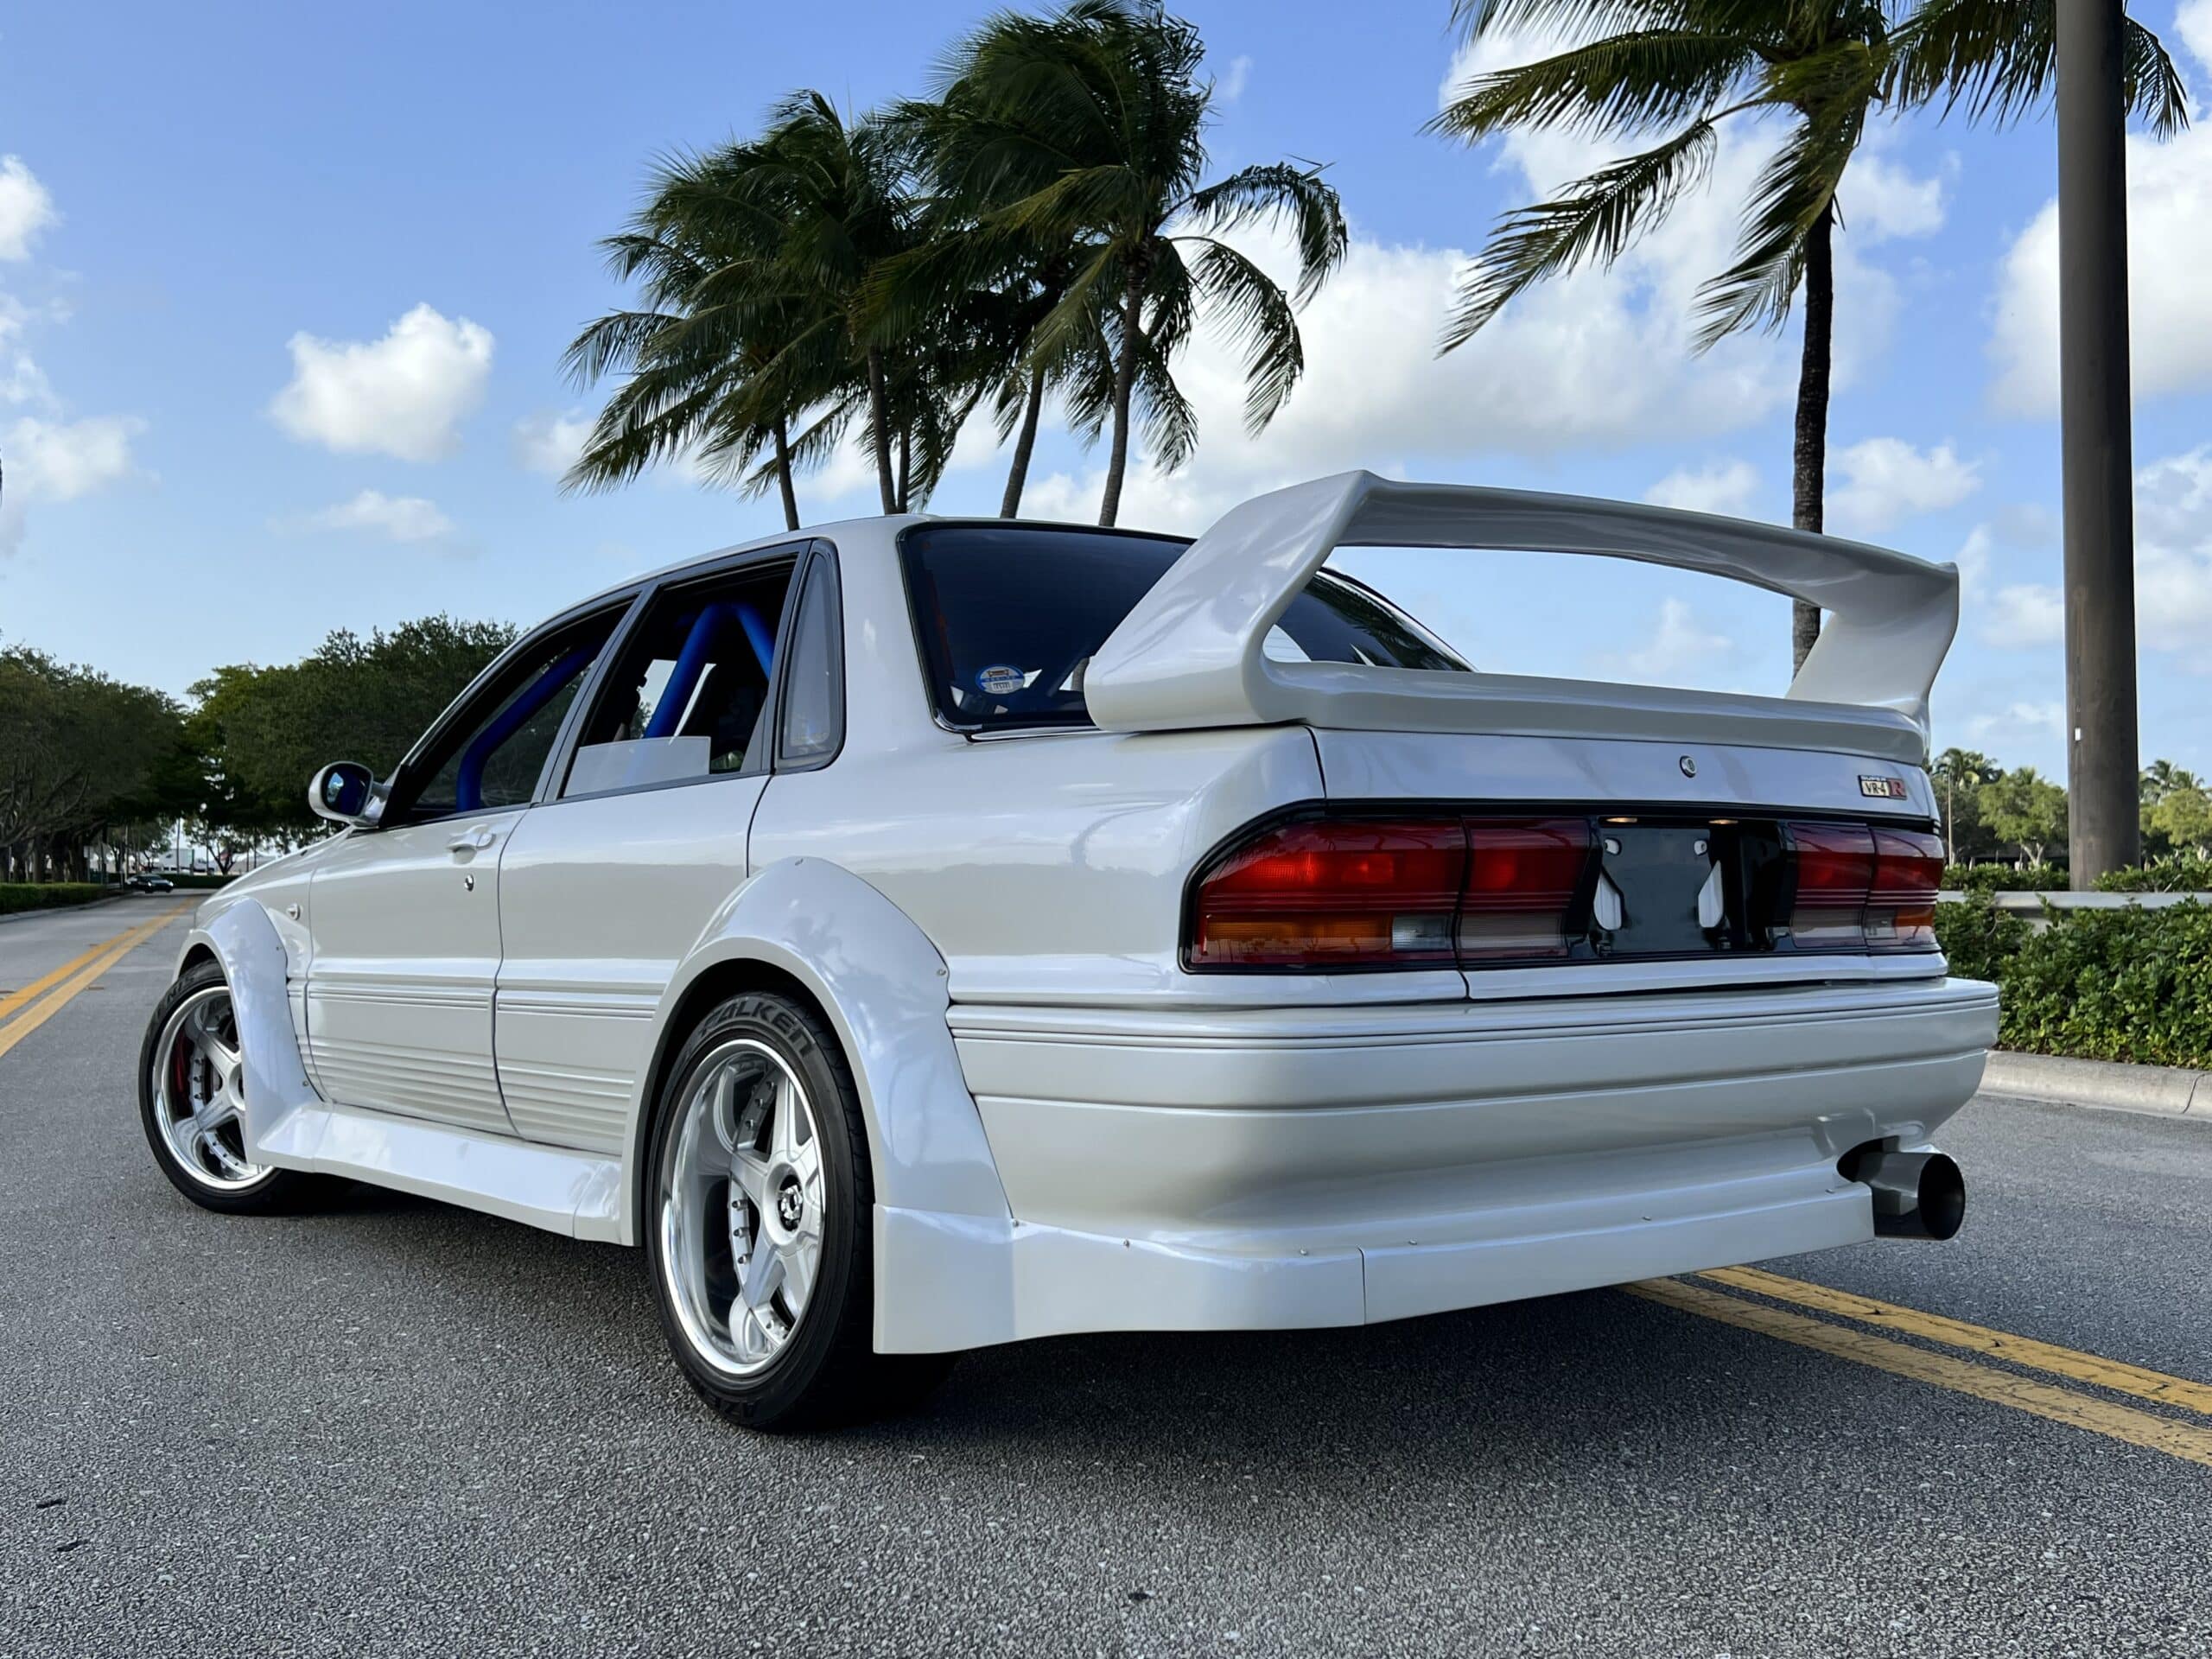 1990 Mitsubishi Galant Super VR4 Widebody SHOW CAR – 4G63 – JDM – Carbon Seats – Rally Suspension – $100k Build